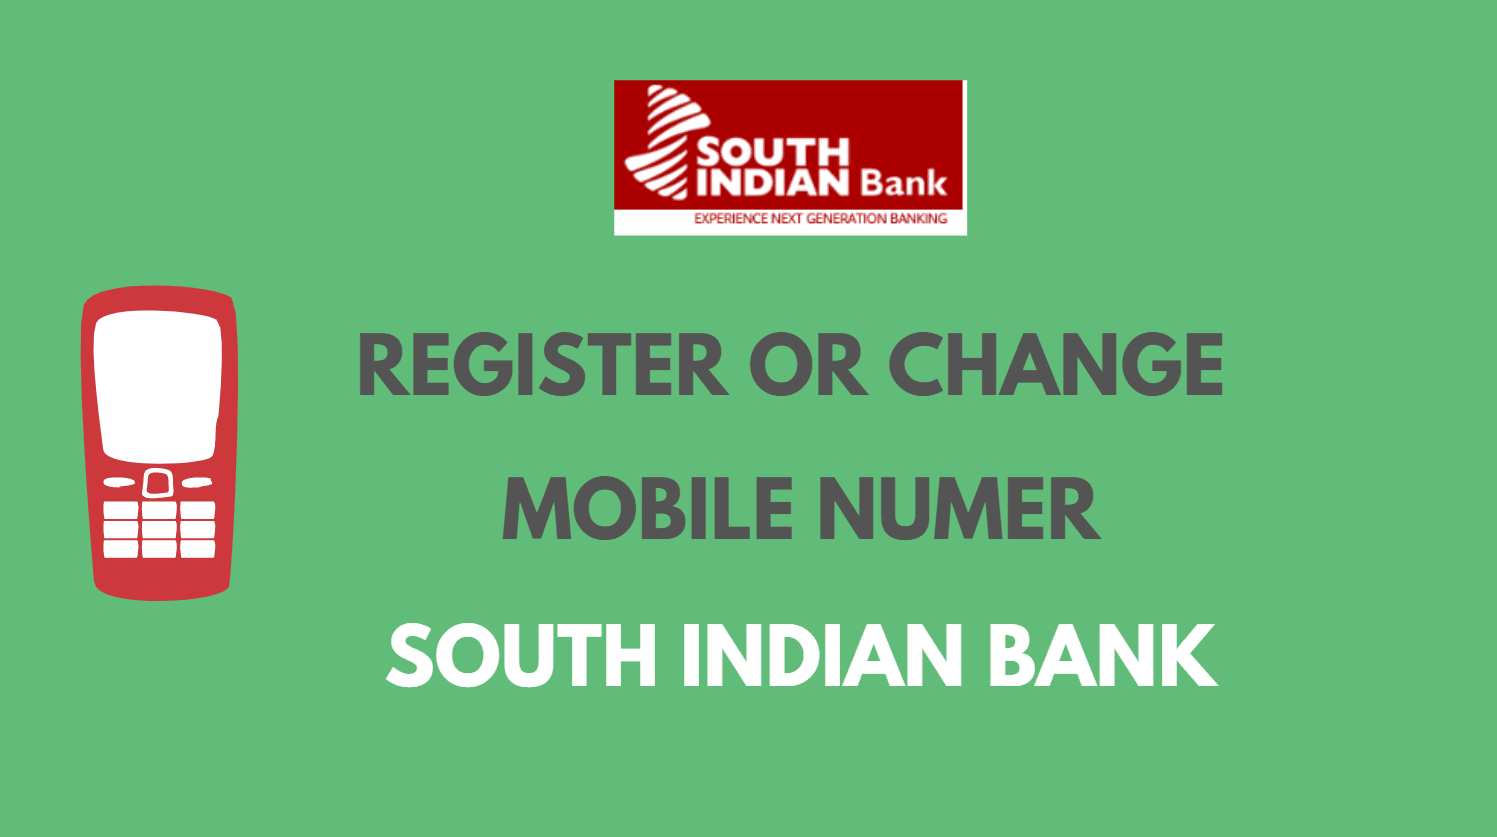 Register or Change Mobile Number in South Indian Bank